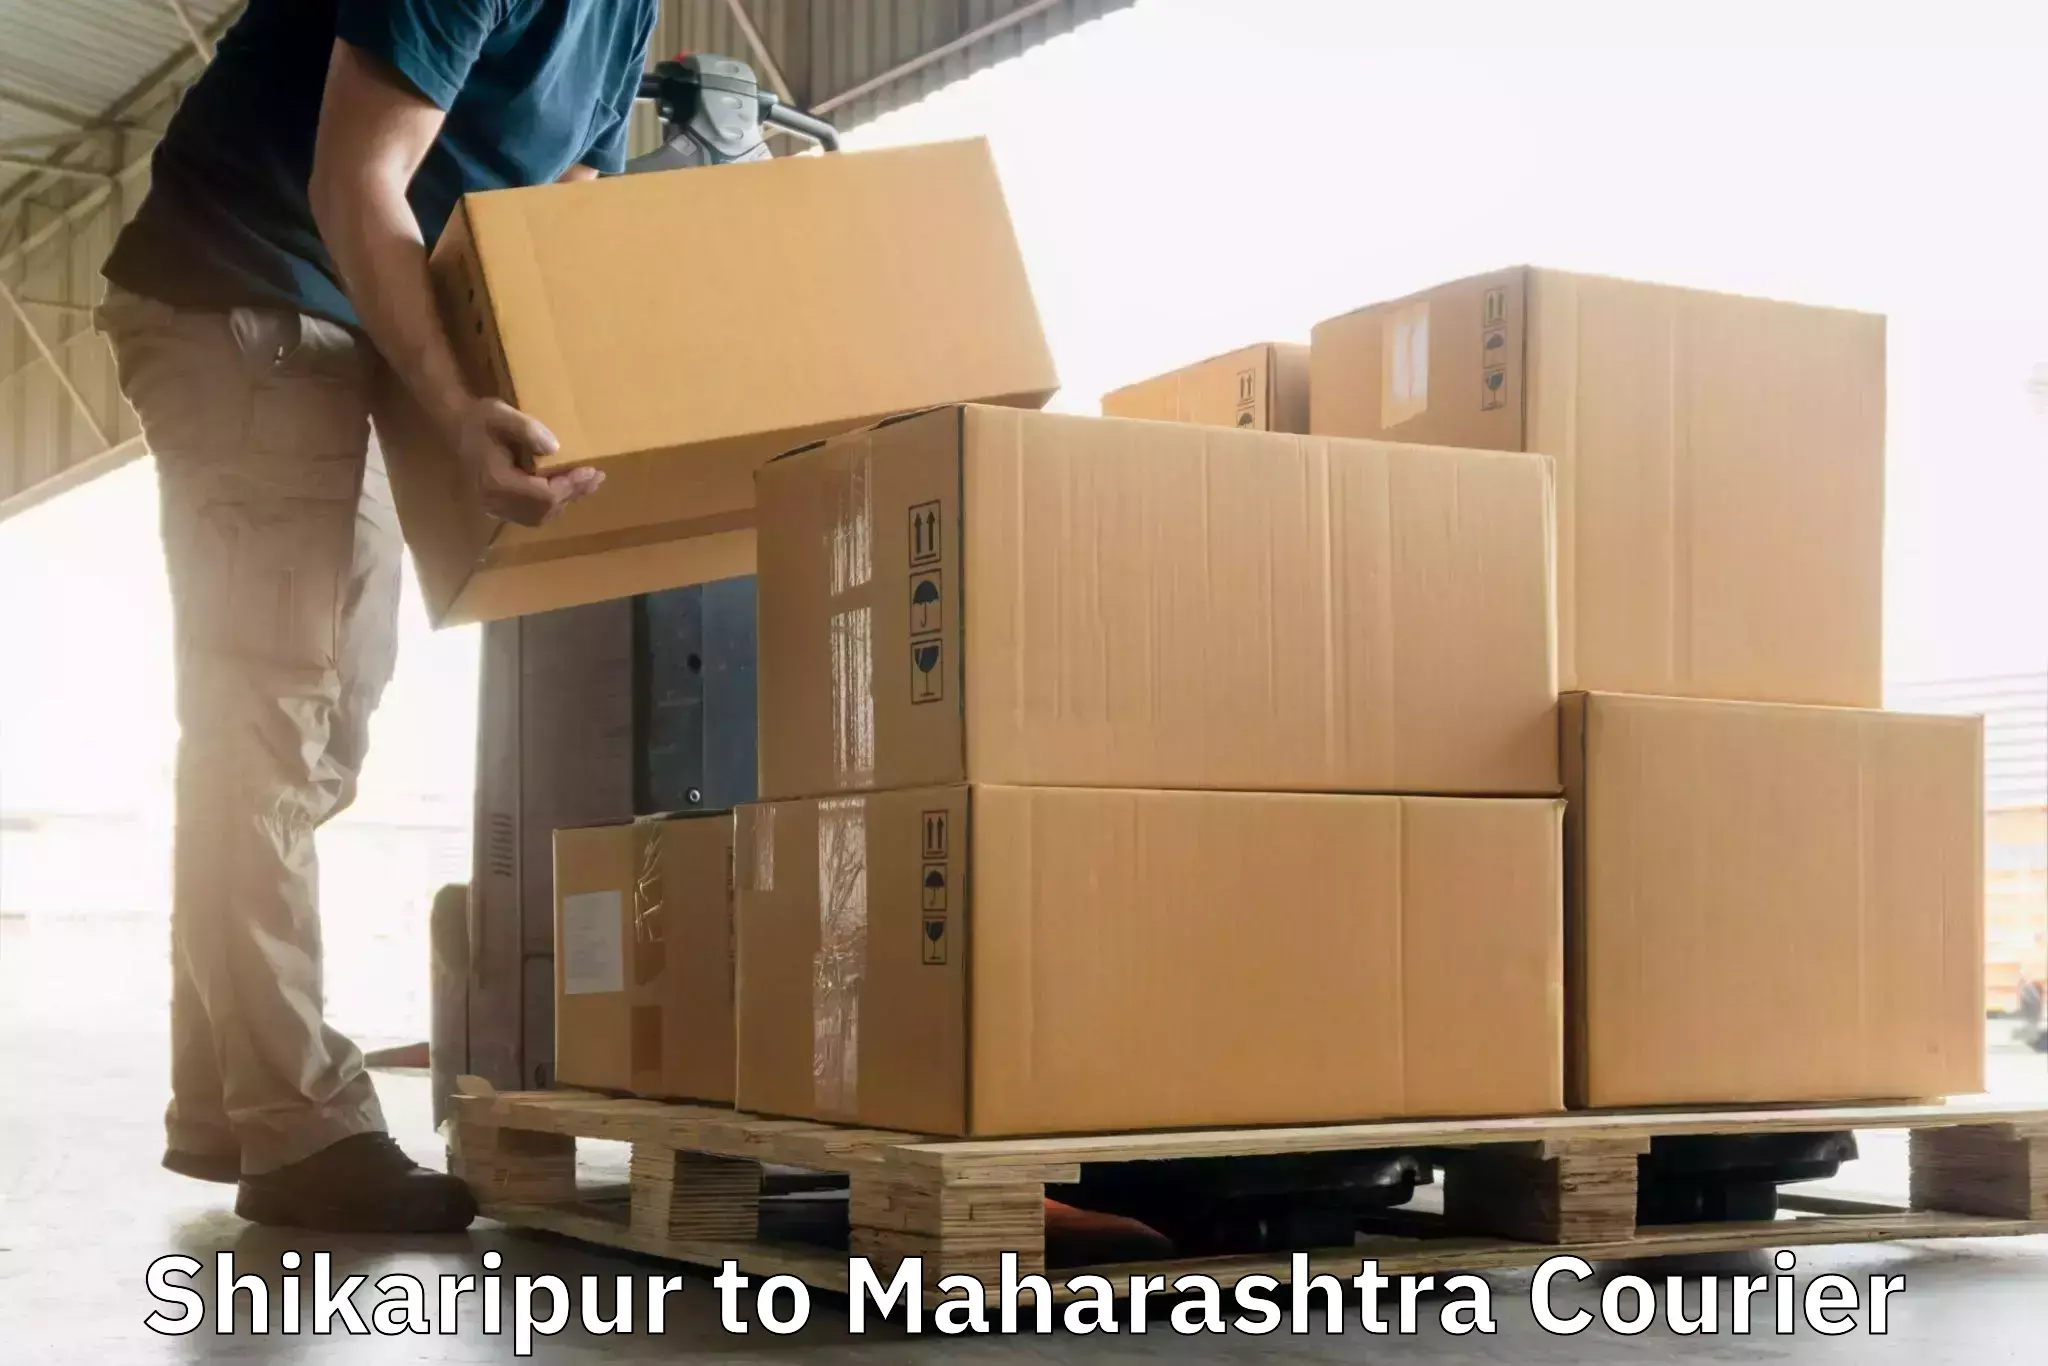 Rapid freight solutions Shikaripur to Lonavala